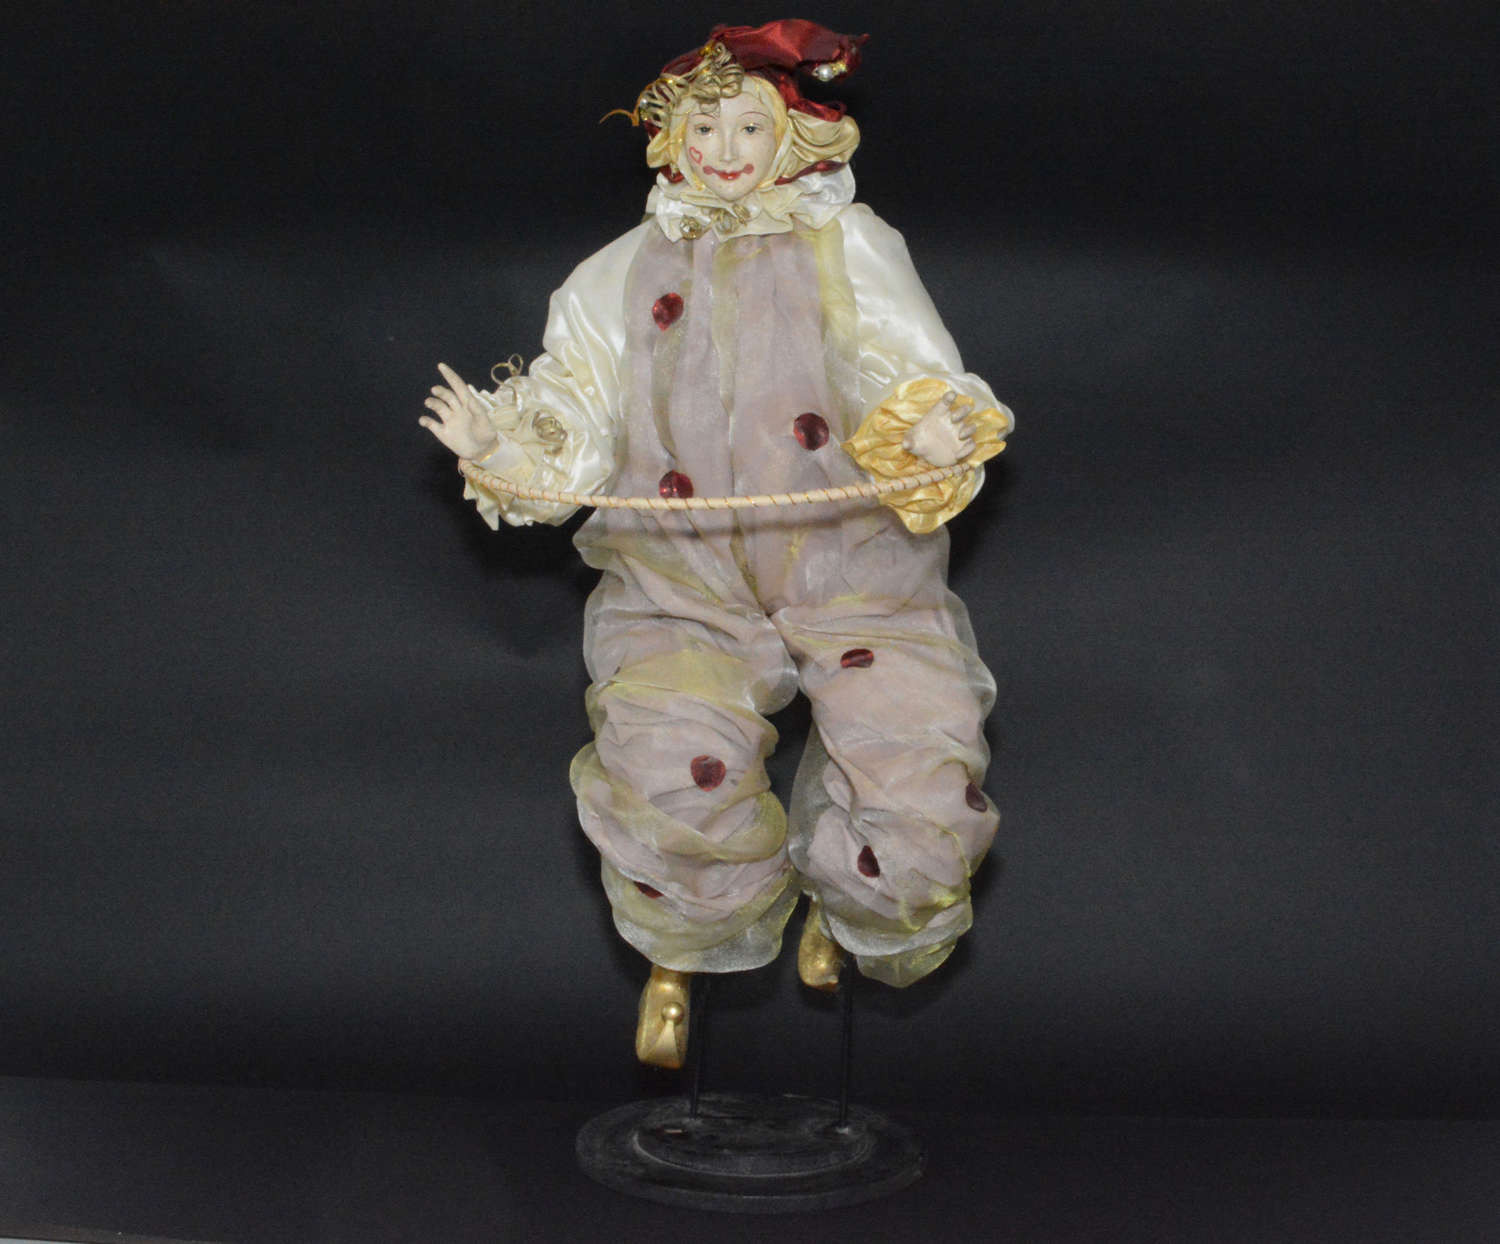 A large vintage Commedia dell arte figure of Pierrot